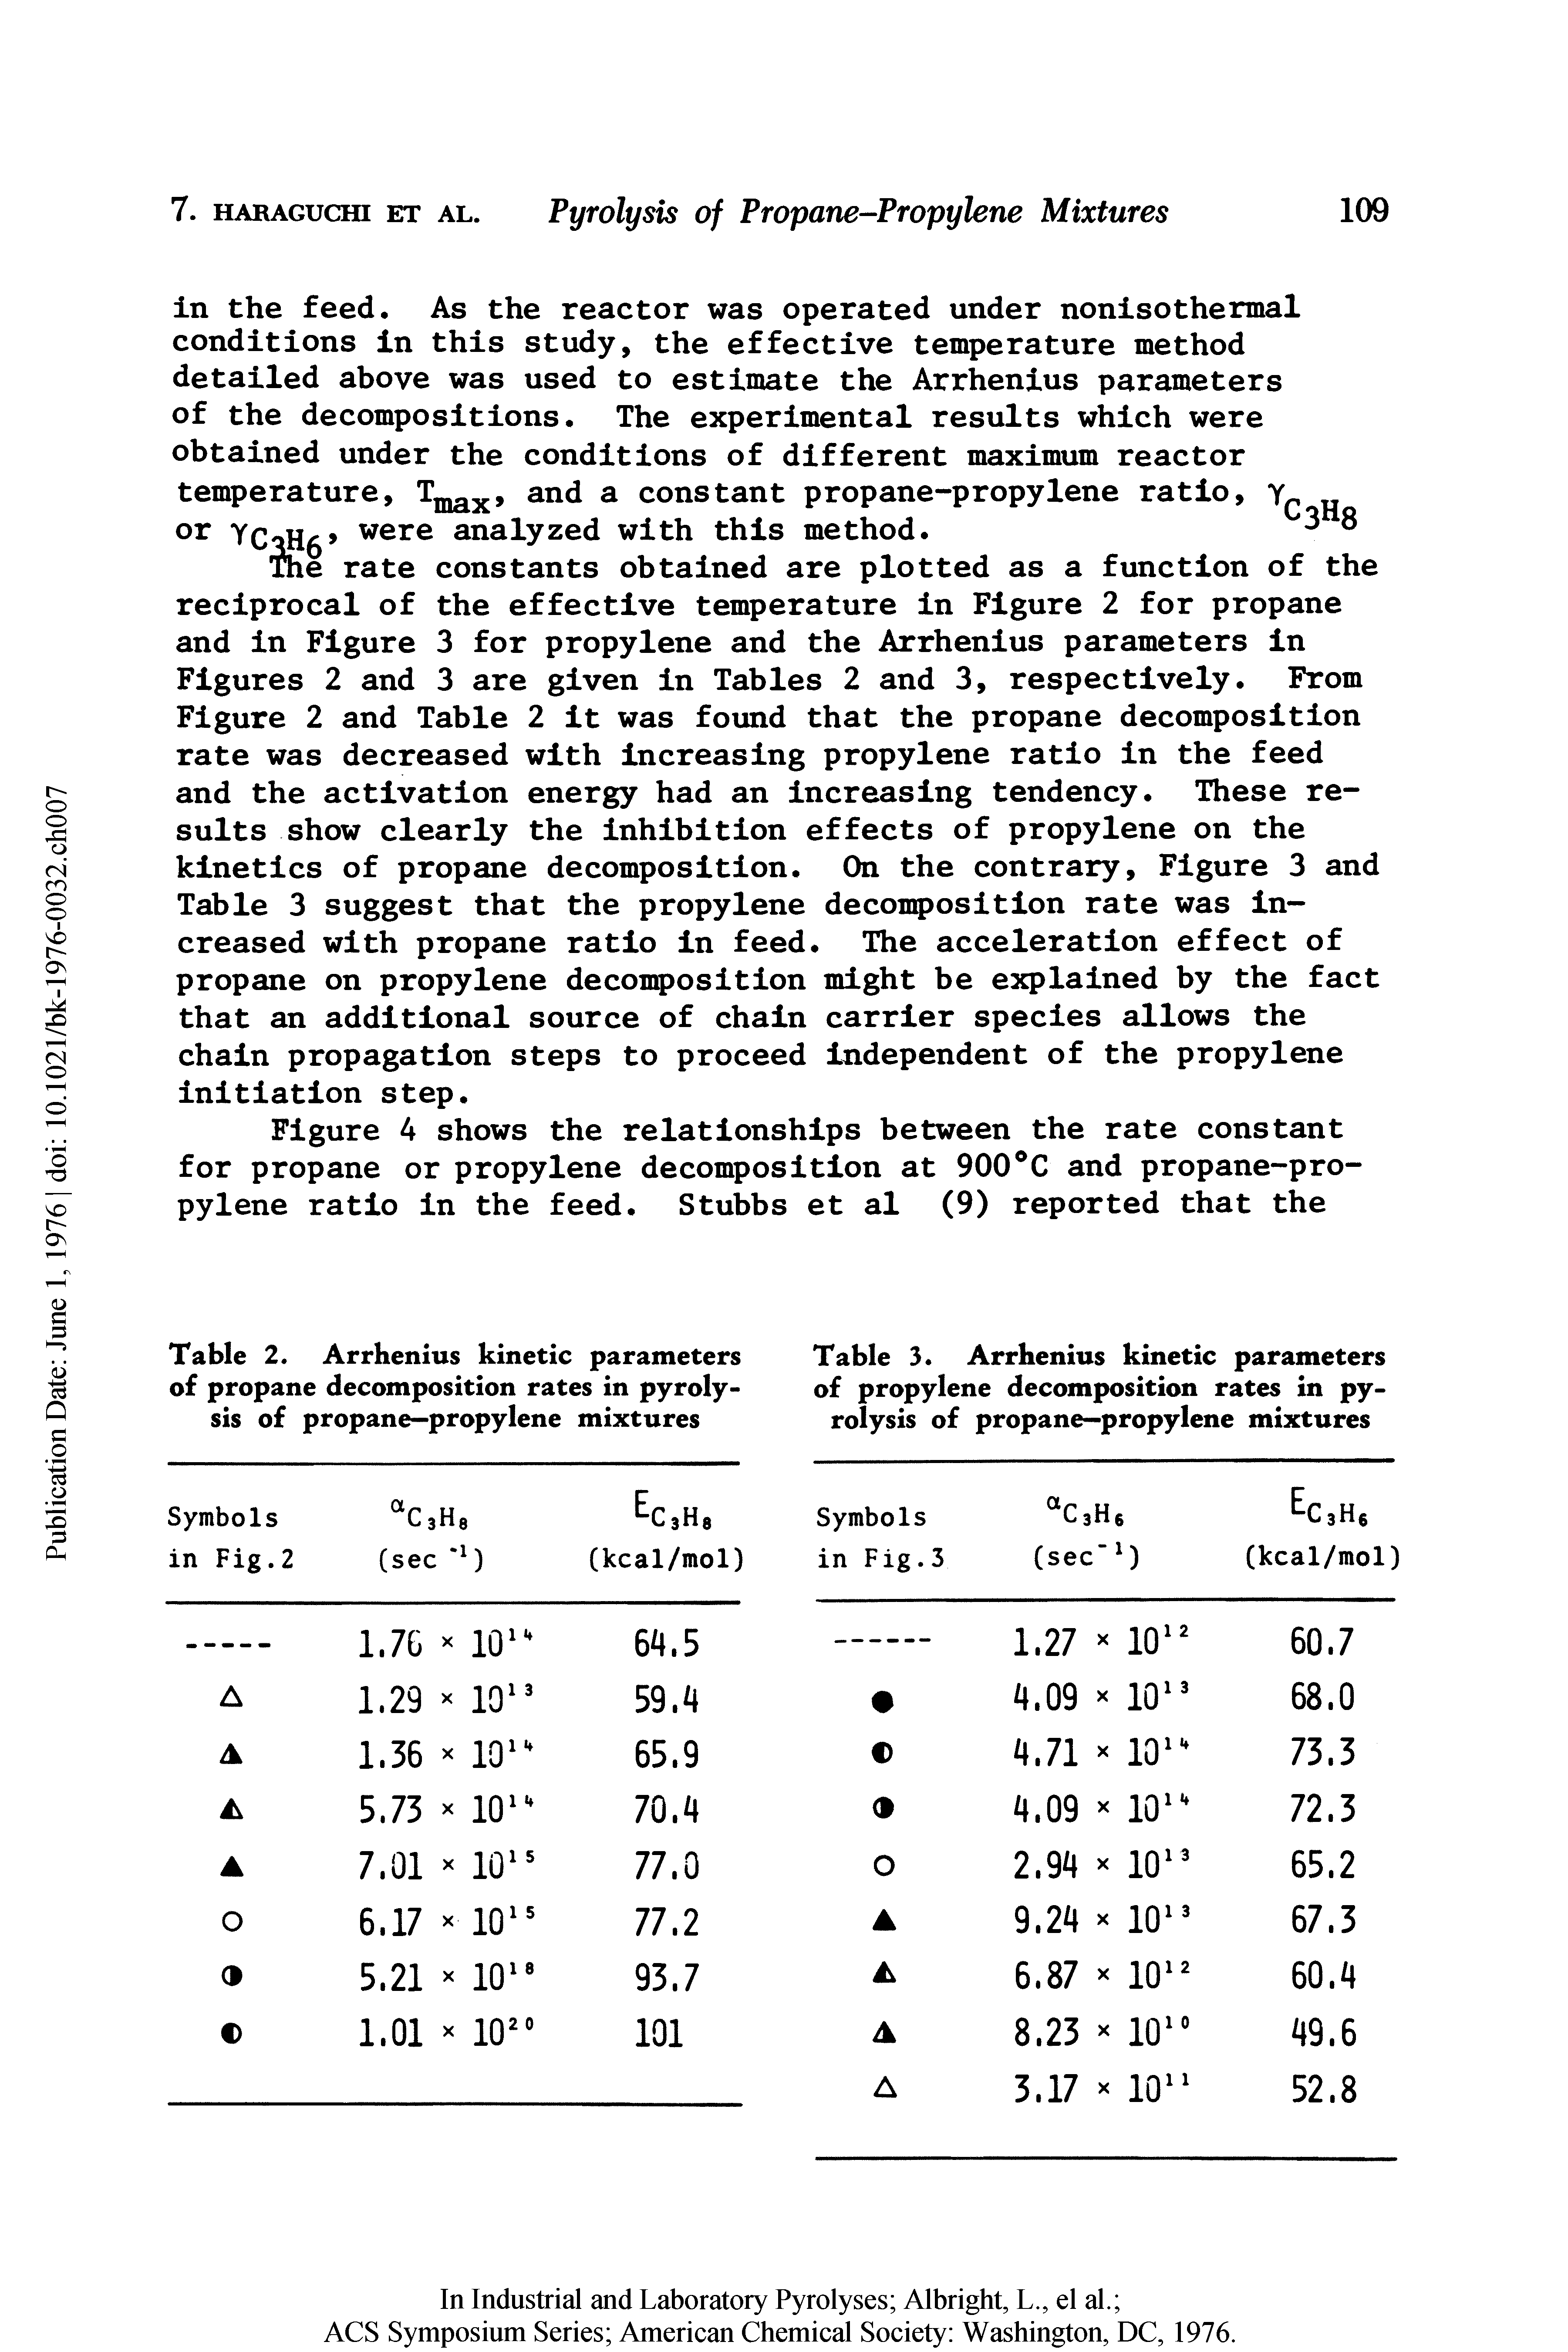 Table 2. Arrhenius kinetic parameters of propane decomposition rates in pyrolysis of propane—propylene mixtures ...